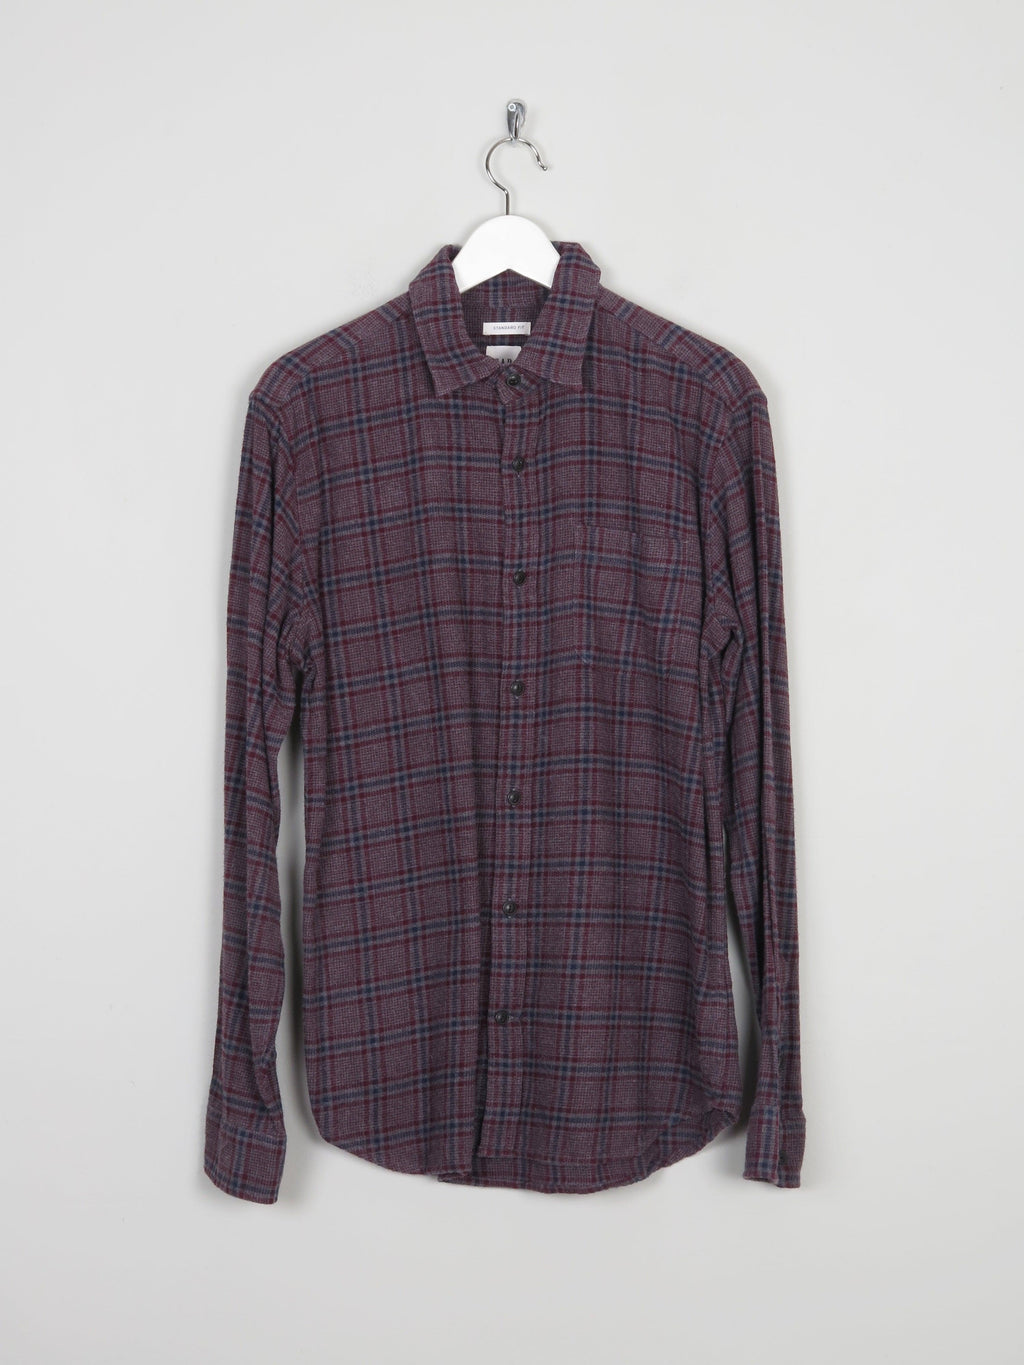 Men's Wine Classic Flannel Gap Shirt M - The Harlequin